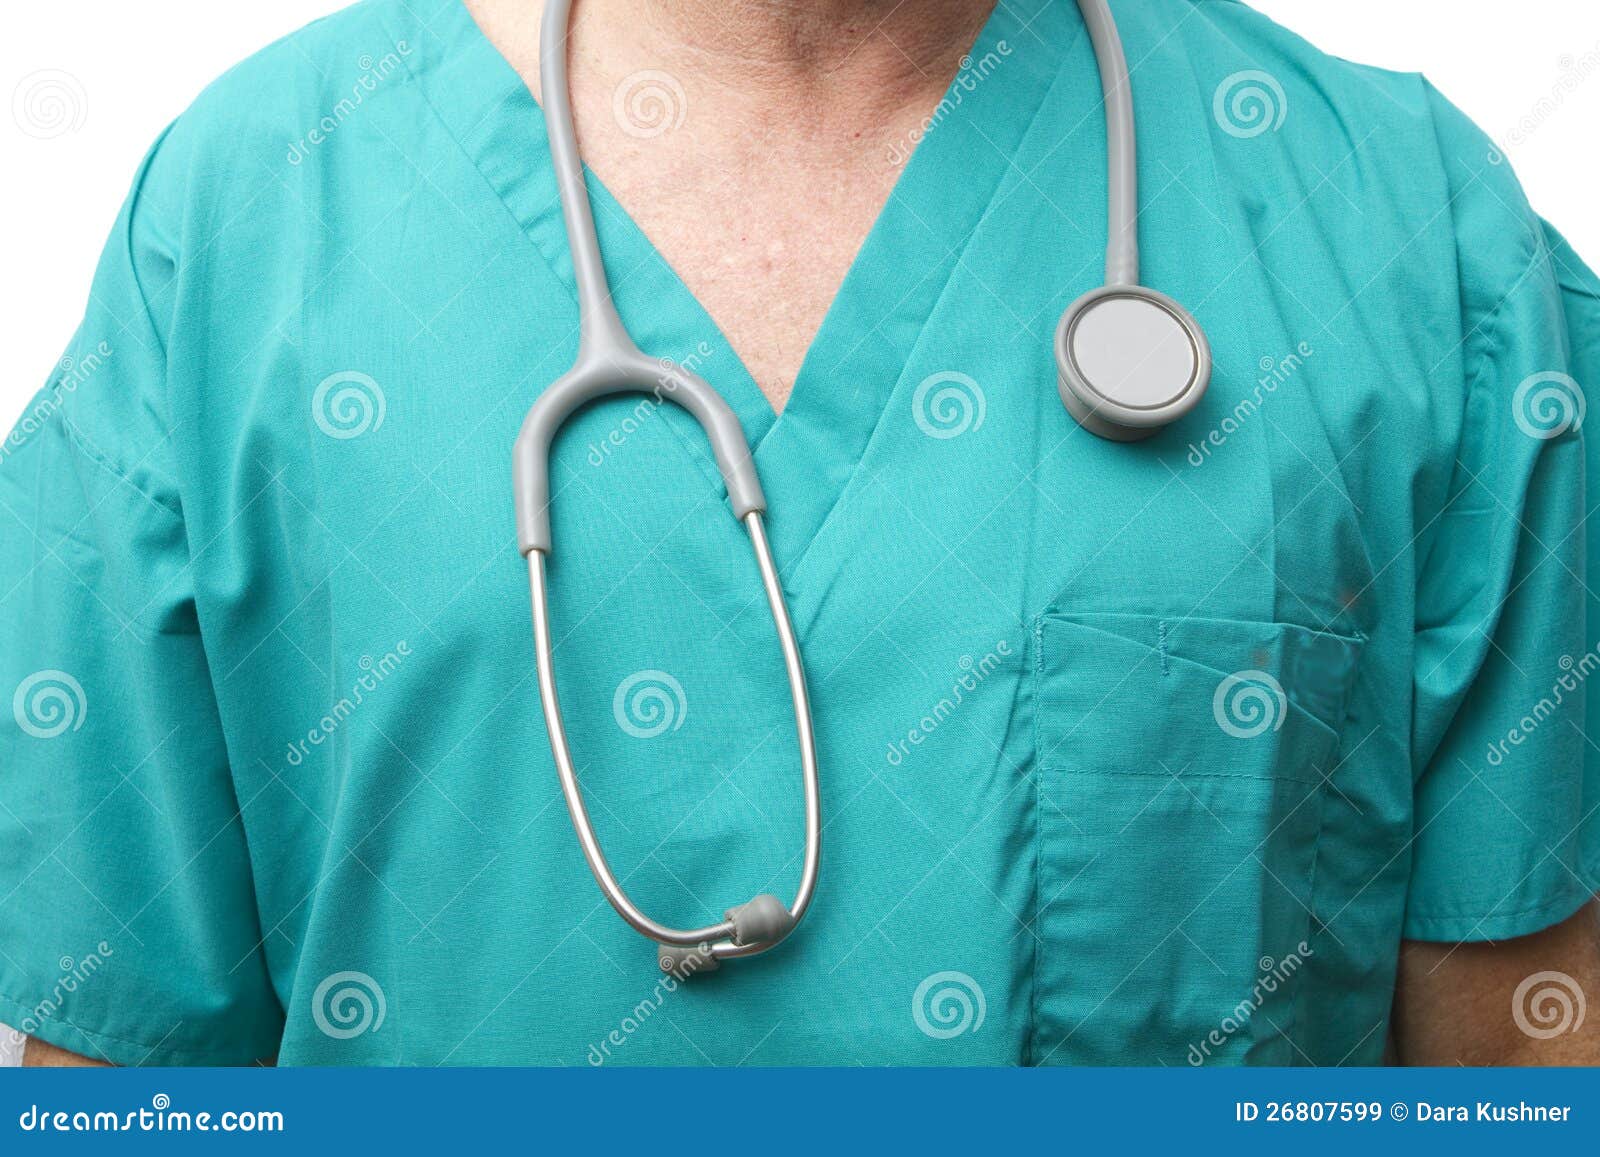 scrubs and stethoscope